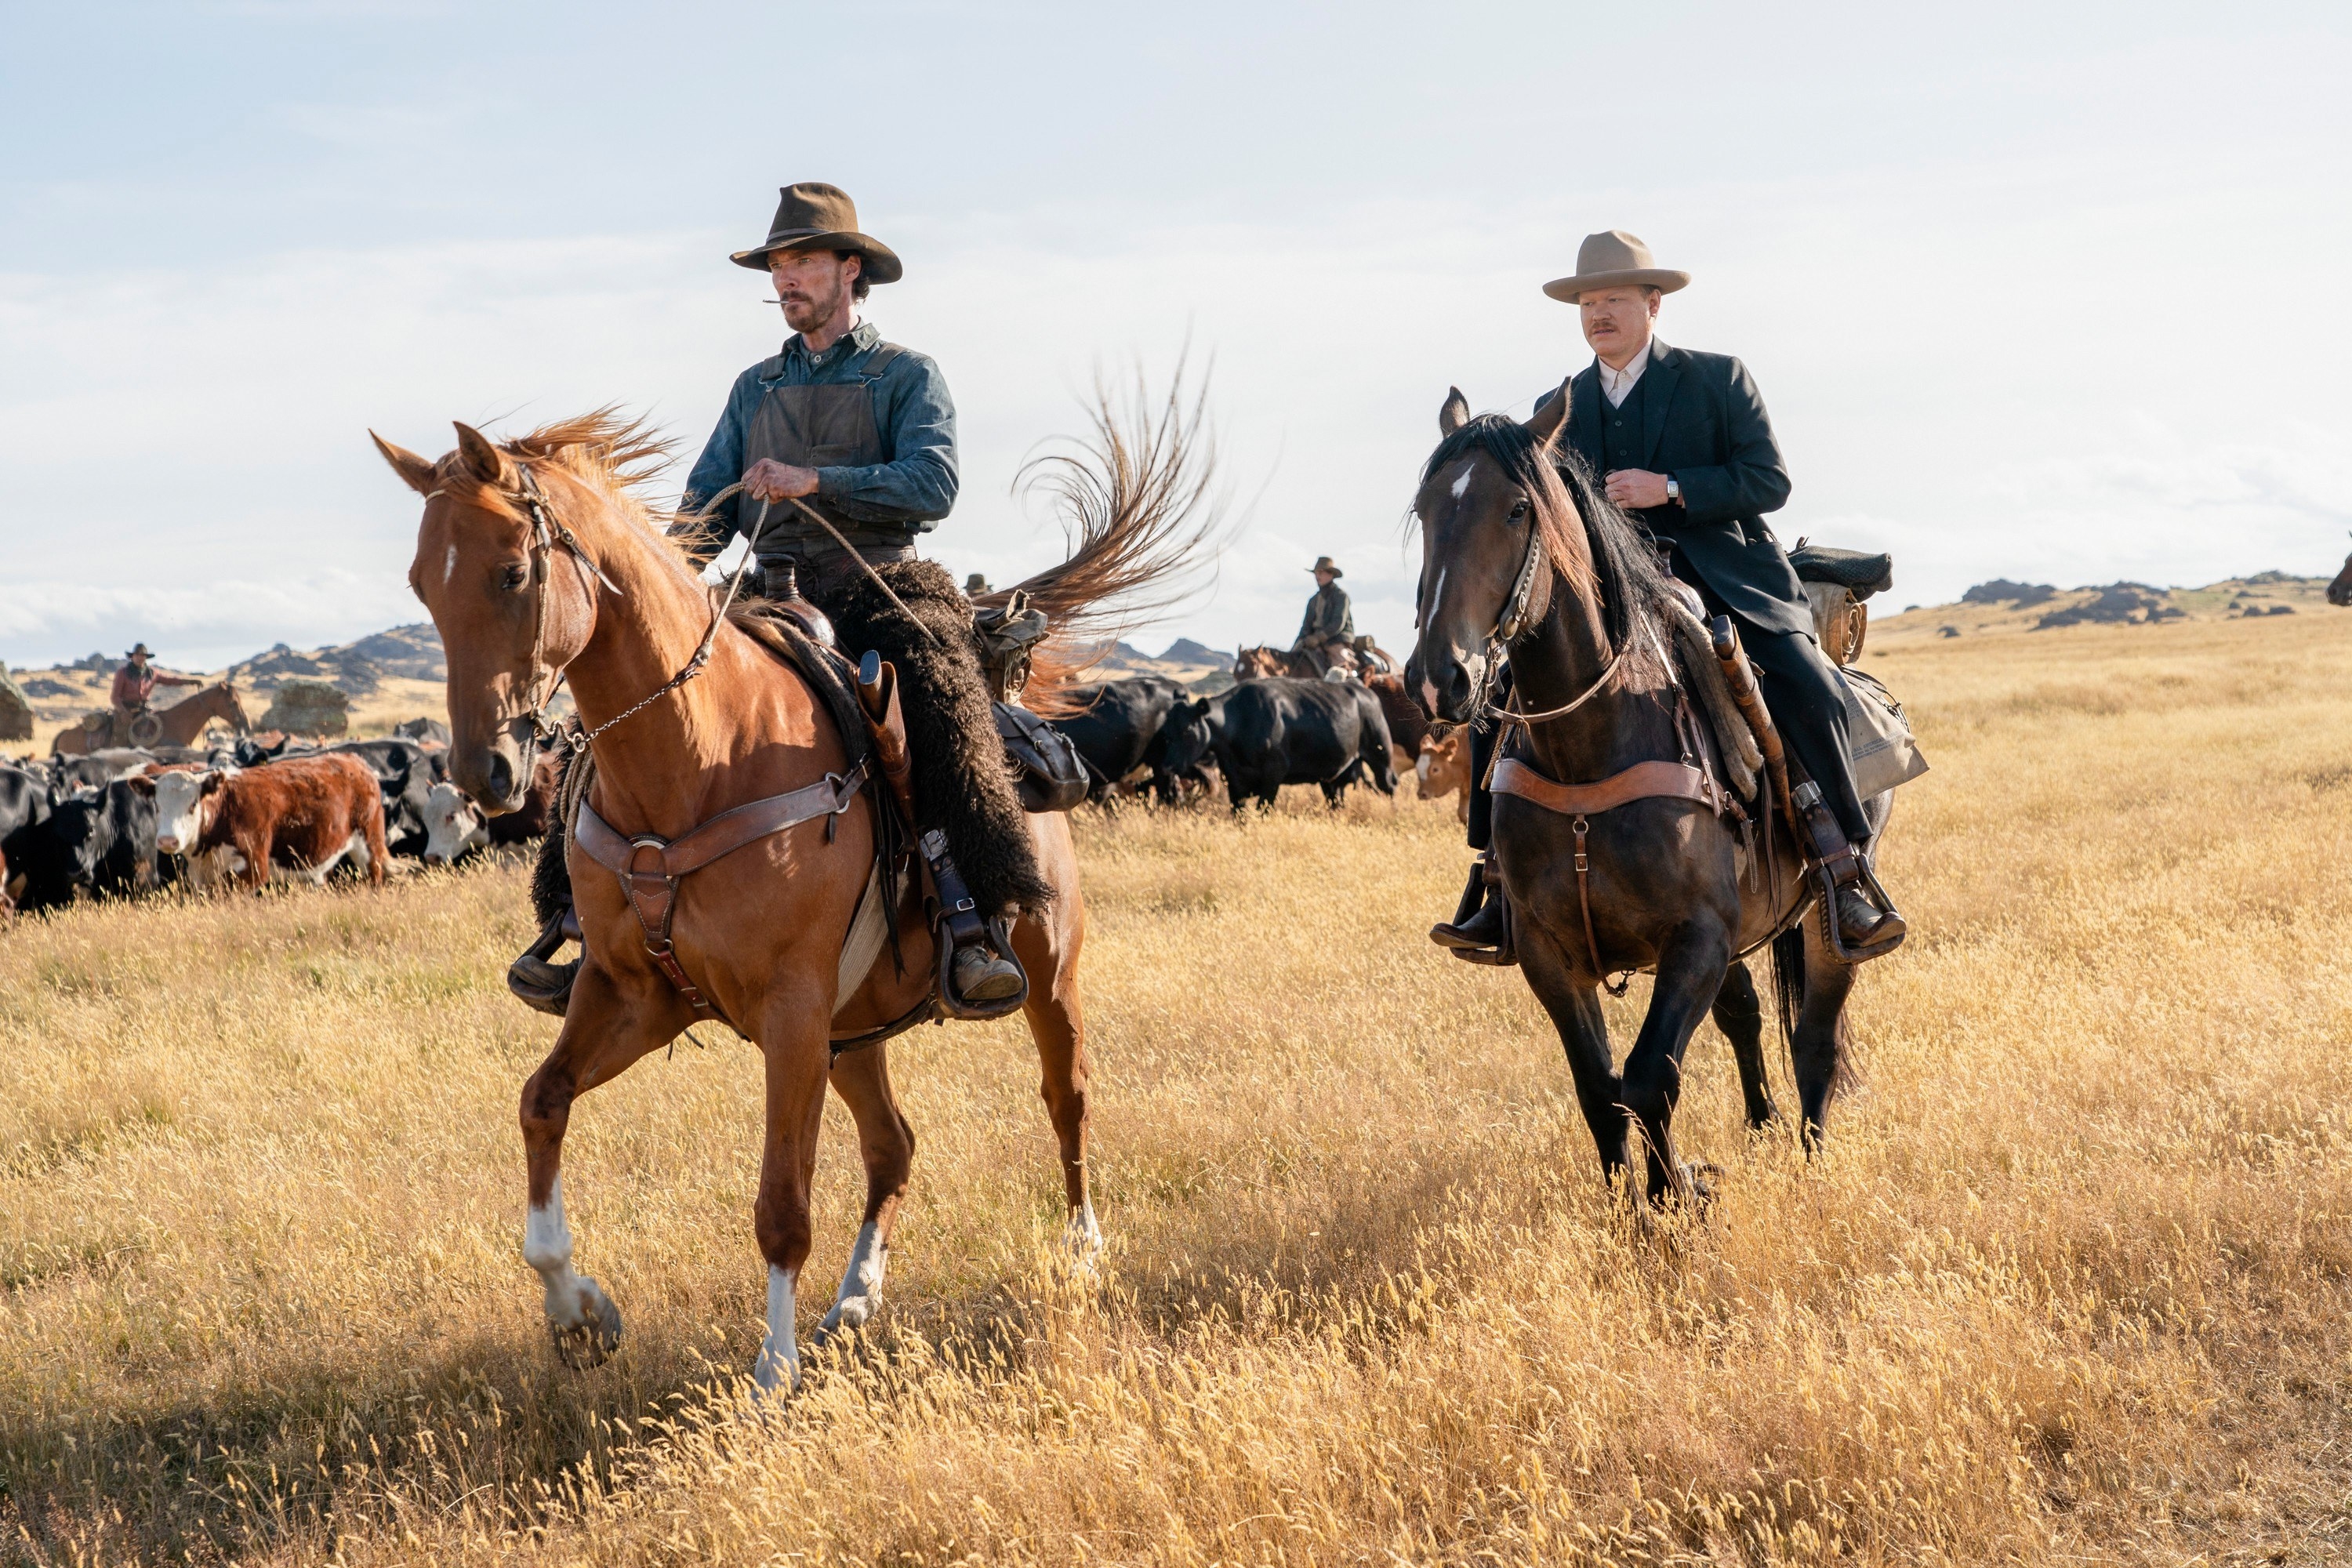 Benedict and Jesse ride horses in the film